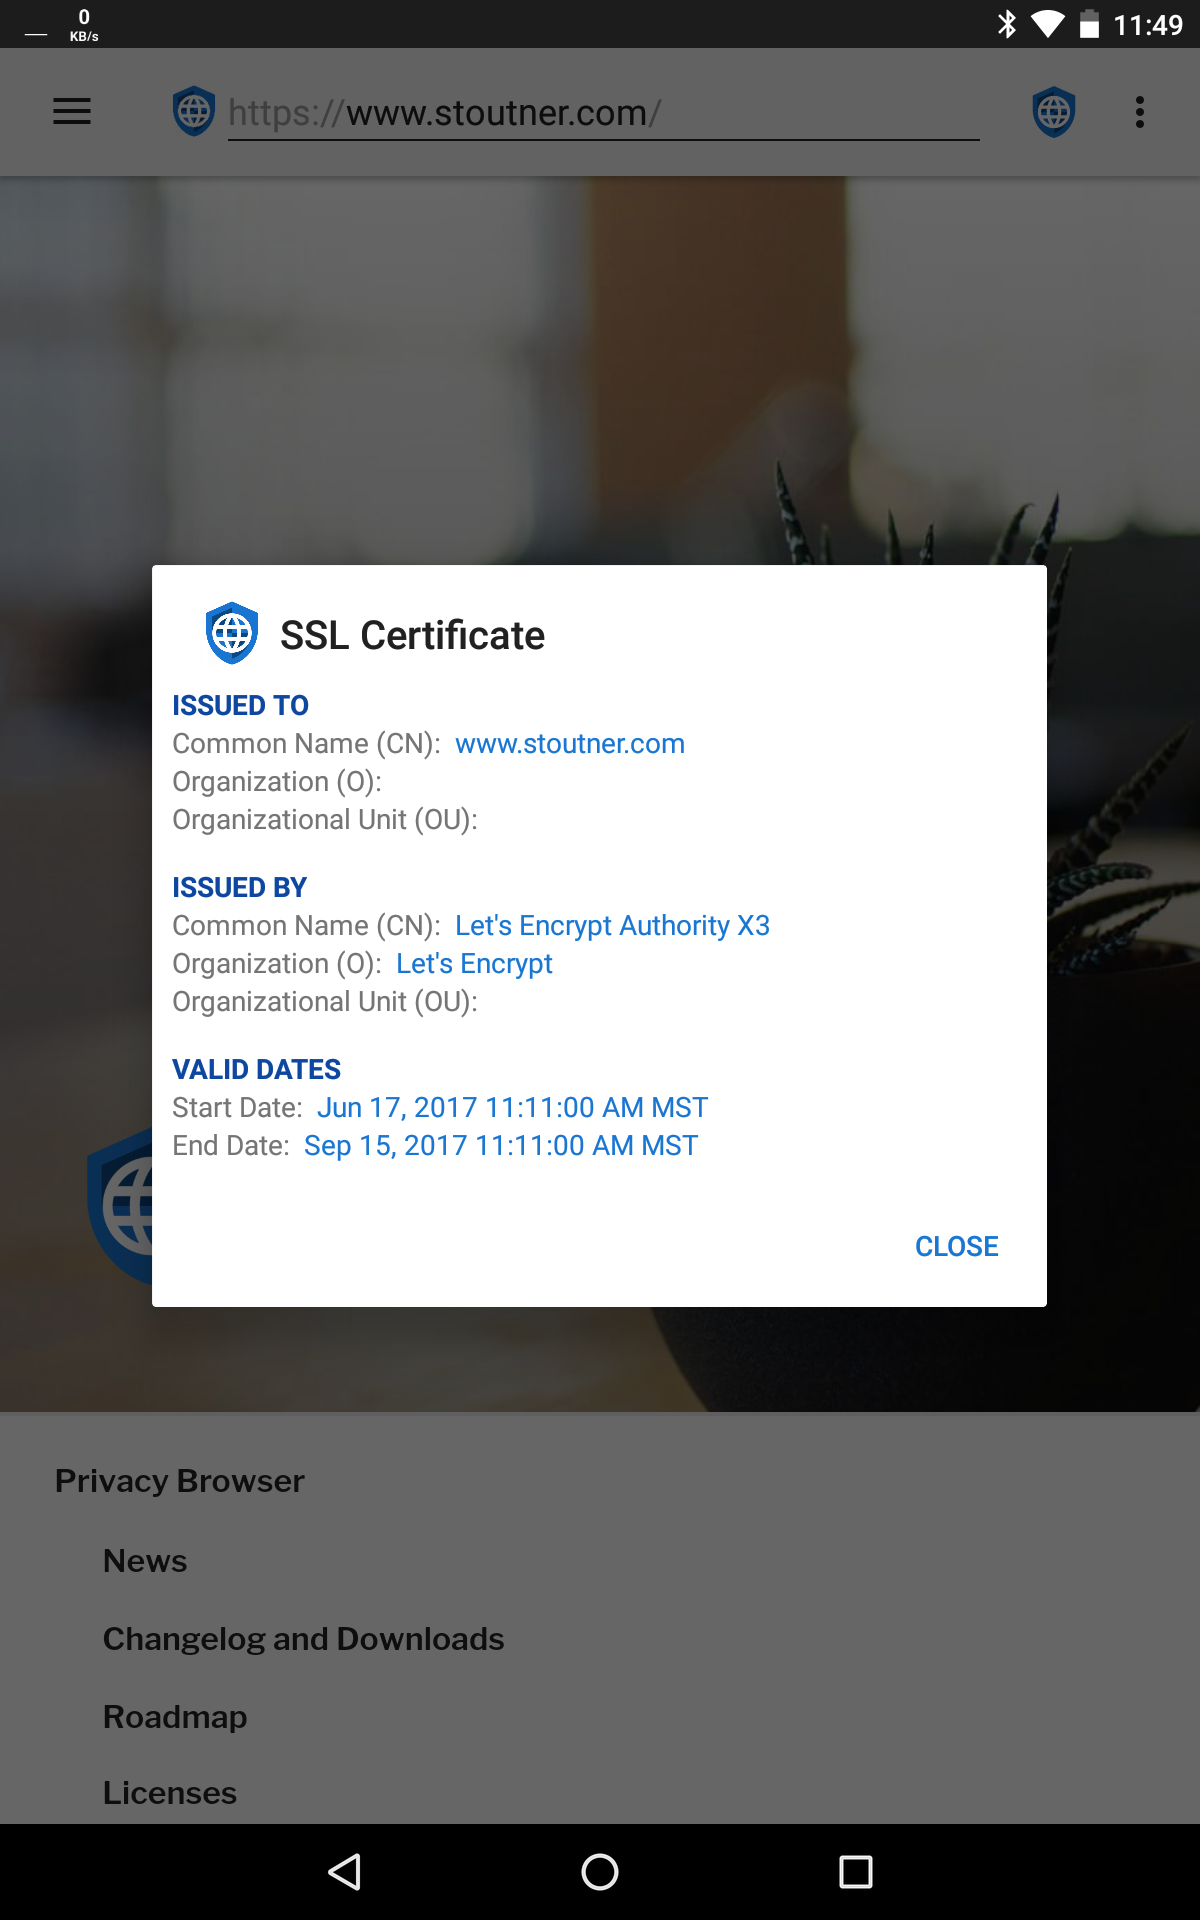 fastlane/metadata/android/en/sevenInchScreenshots/01 - View SSL Certificate.png